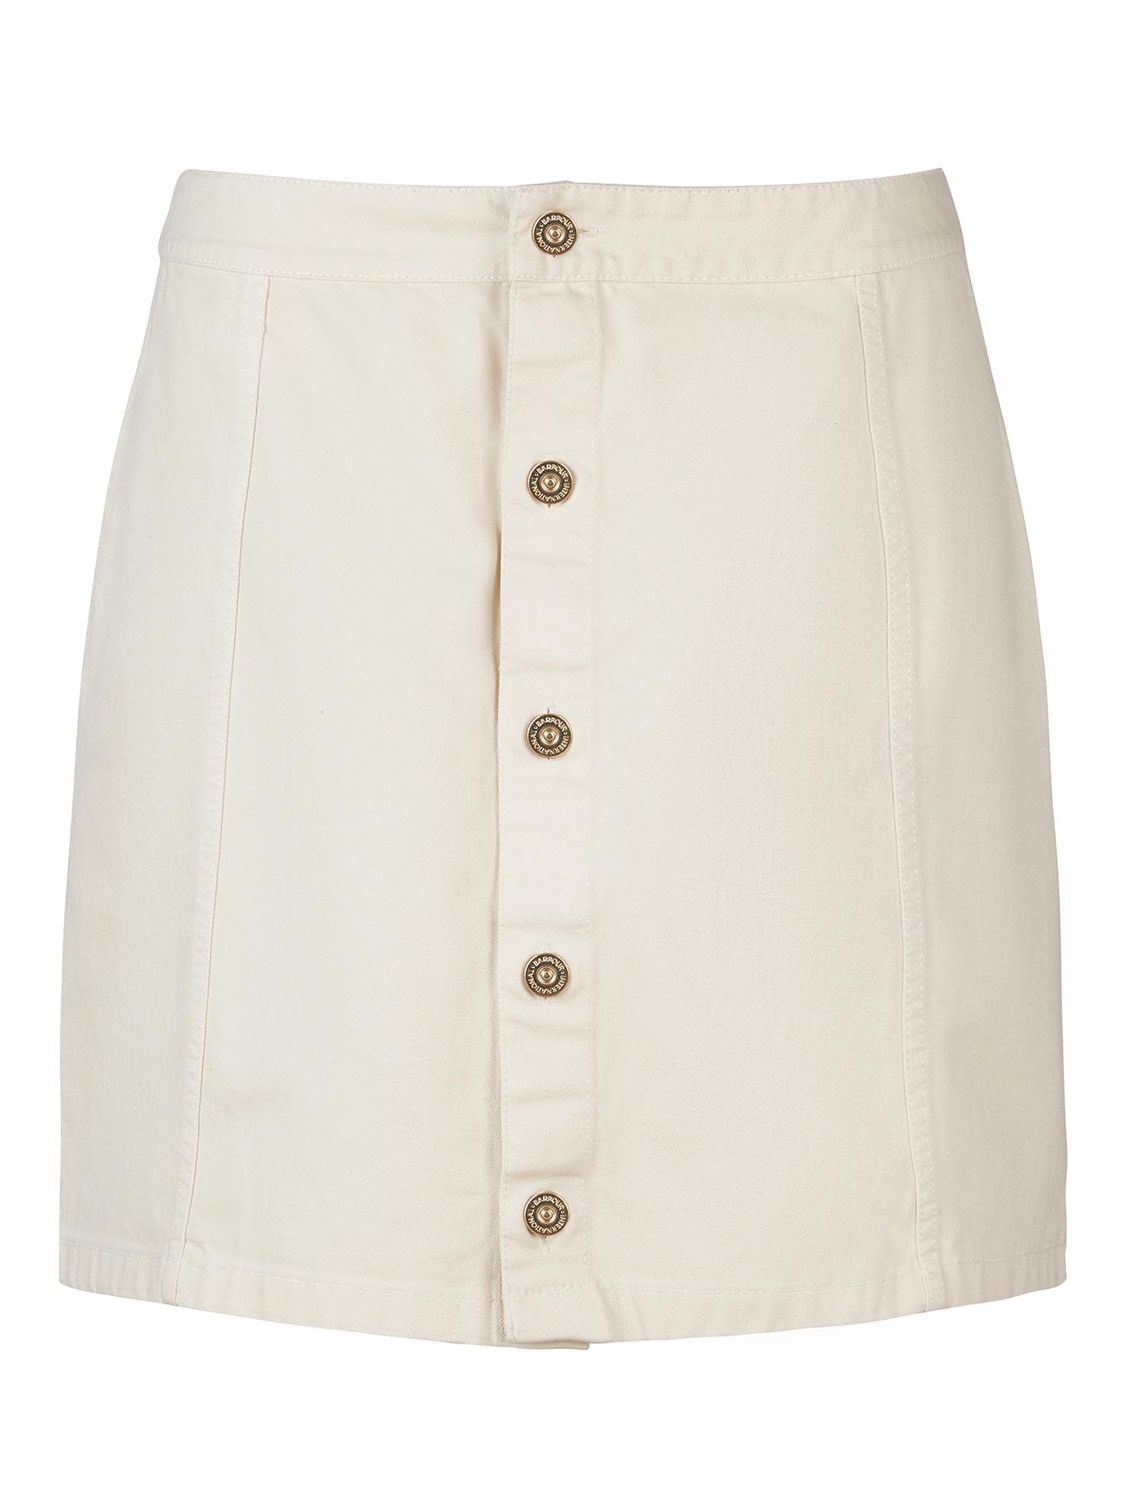 Barbour International Lorimer Denim Skirt, Pebble at John Lewis & Partners